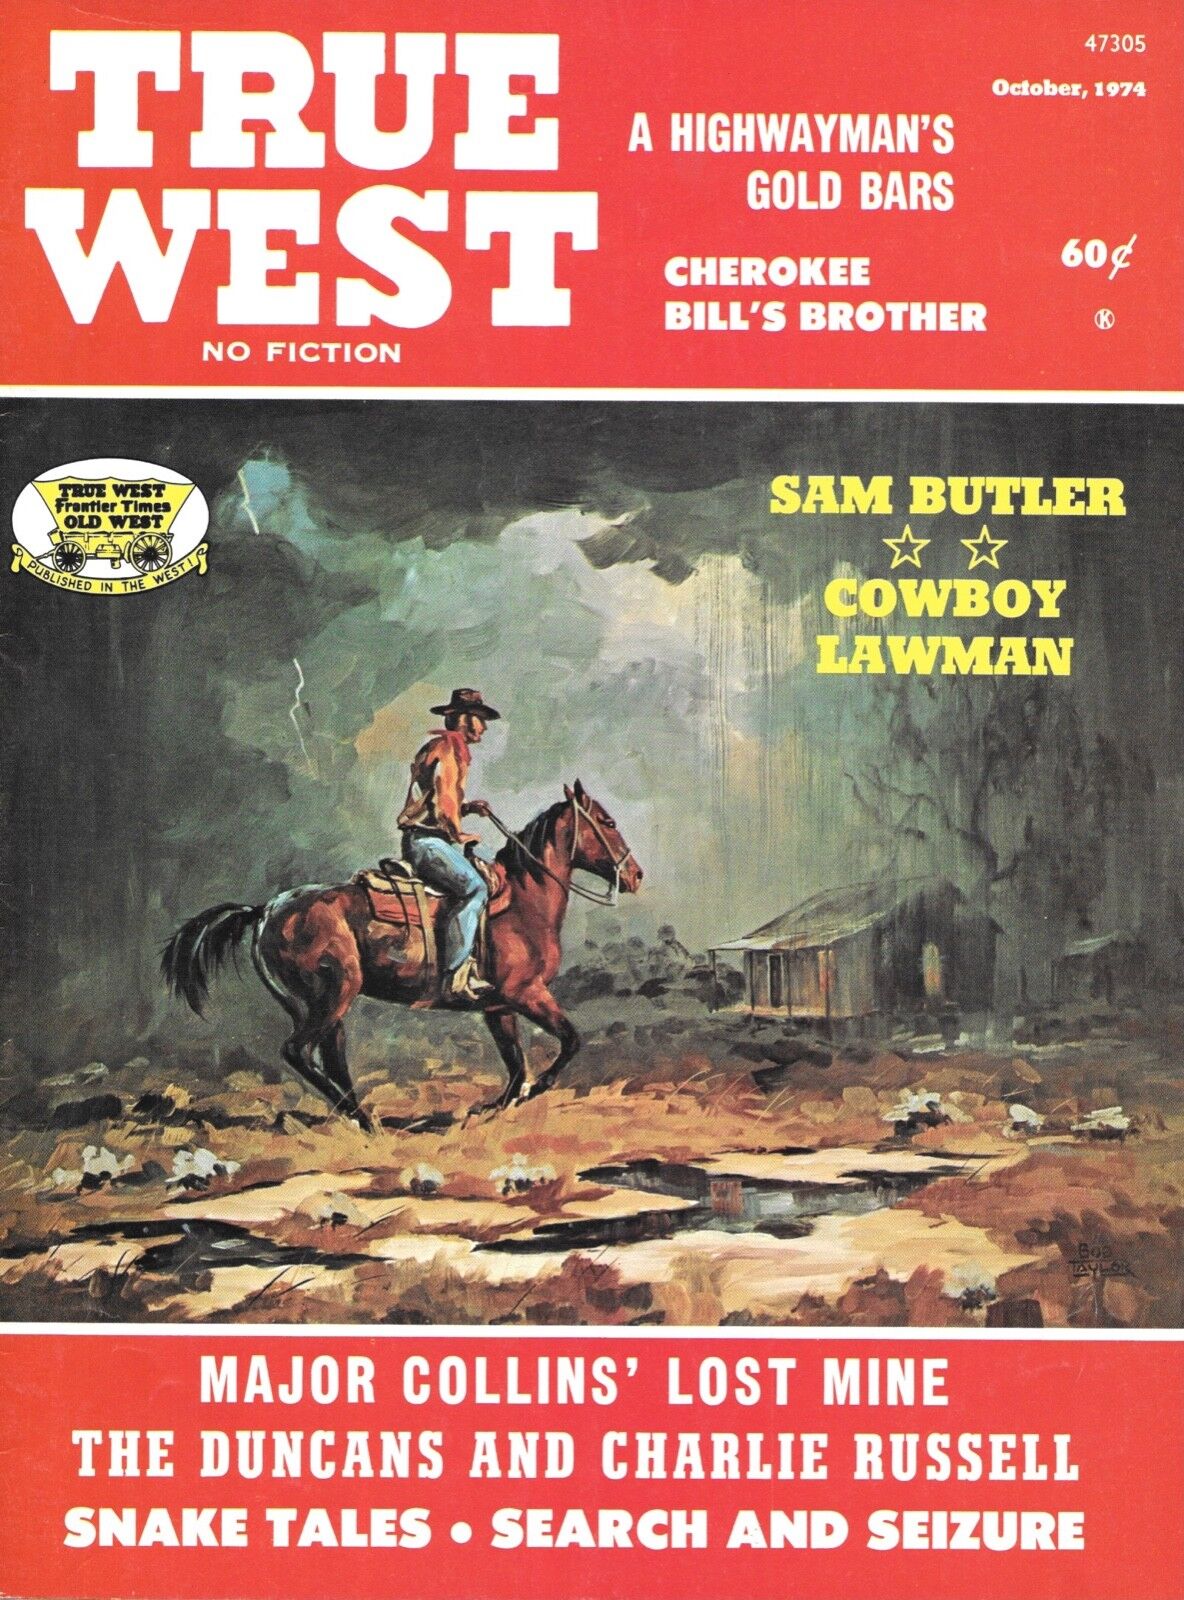 True West Oct.1974 Sam Butler Cowboy Lawman Cherokee Lost Mine Elwood Texas Gold